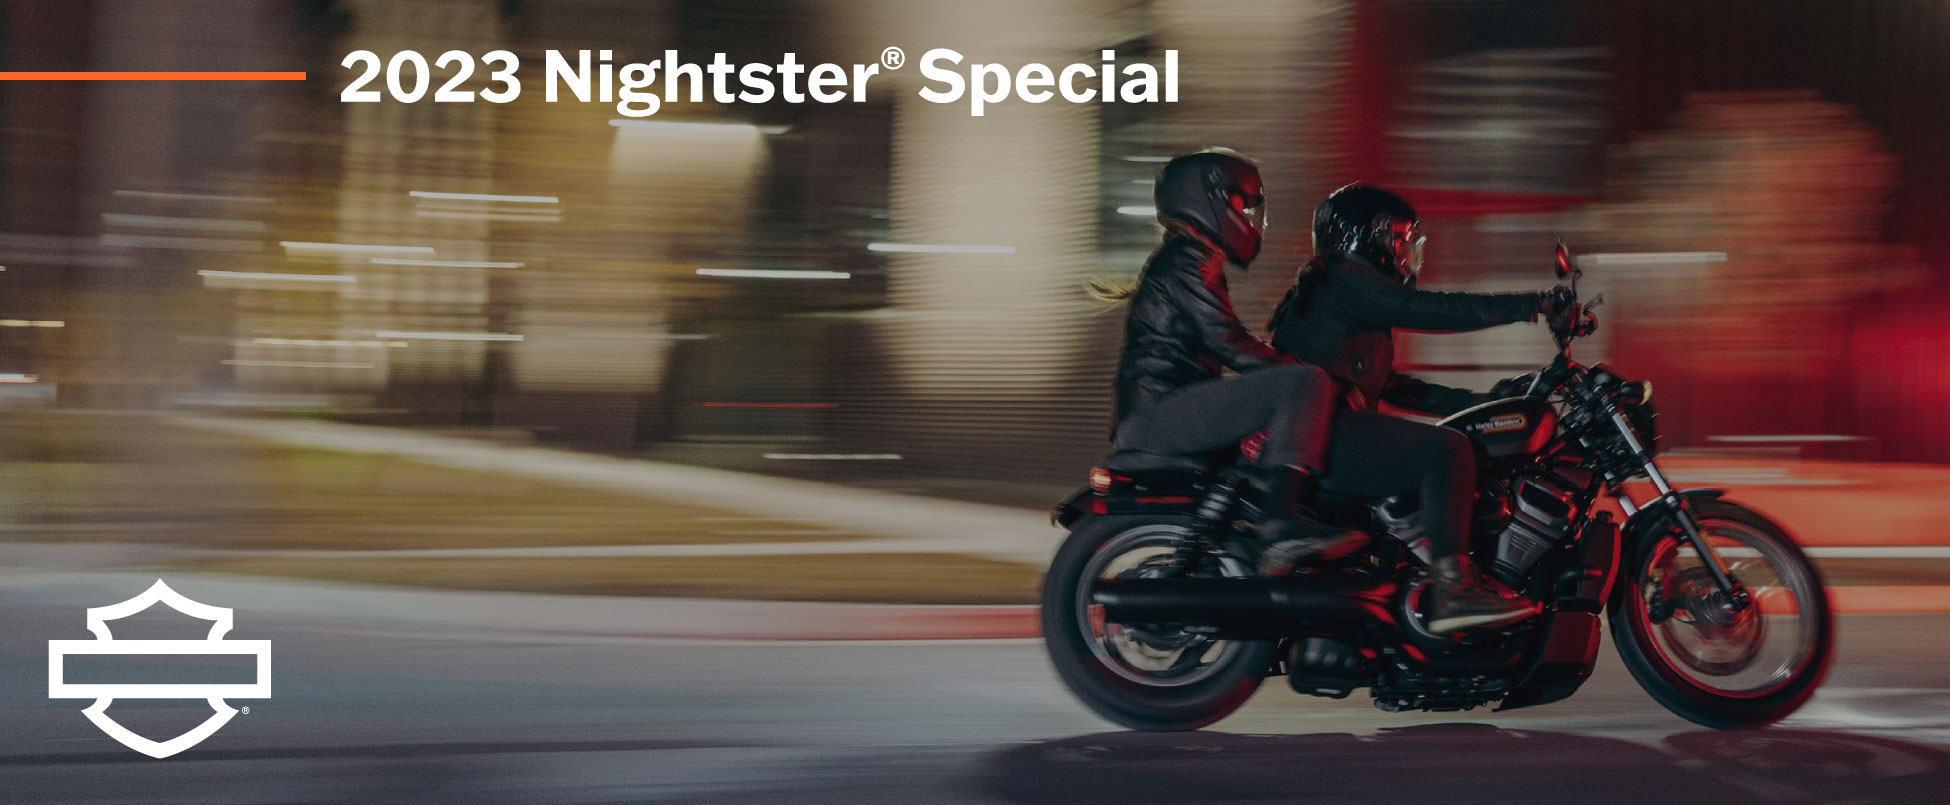 Nueva Harley Davidson Nightster Special 2023